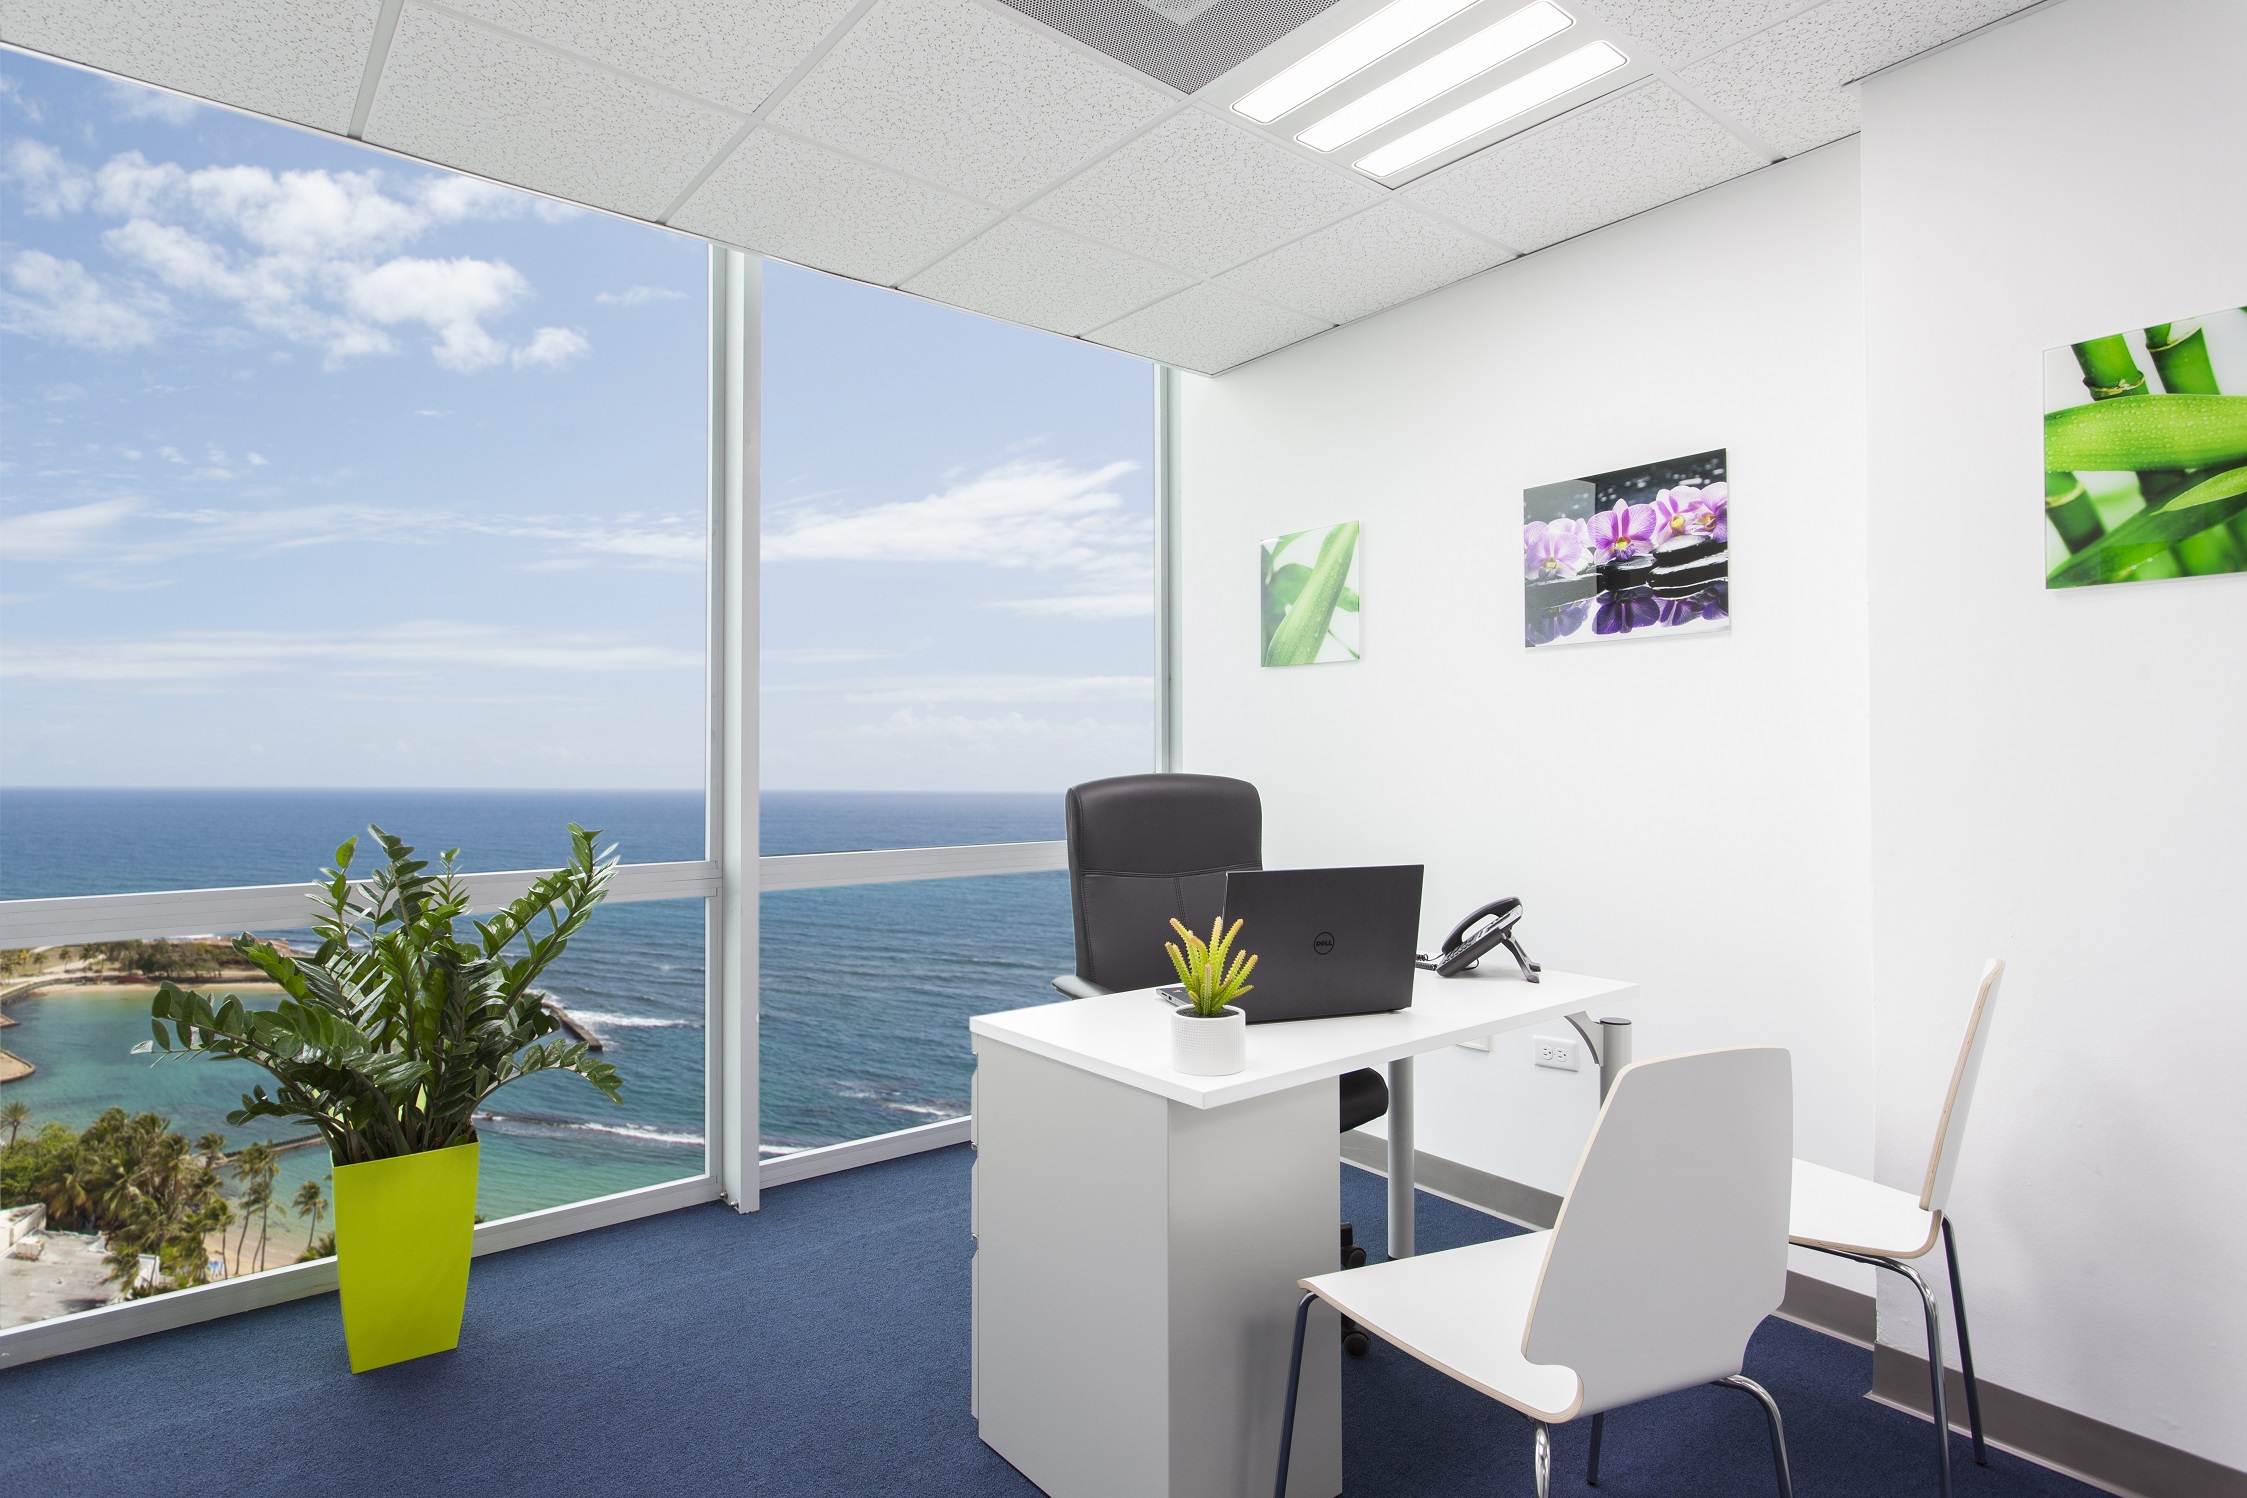 About - La Oficina | Executive Office Spaces in Puerto Rico